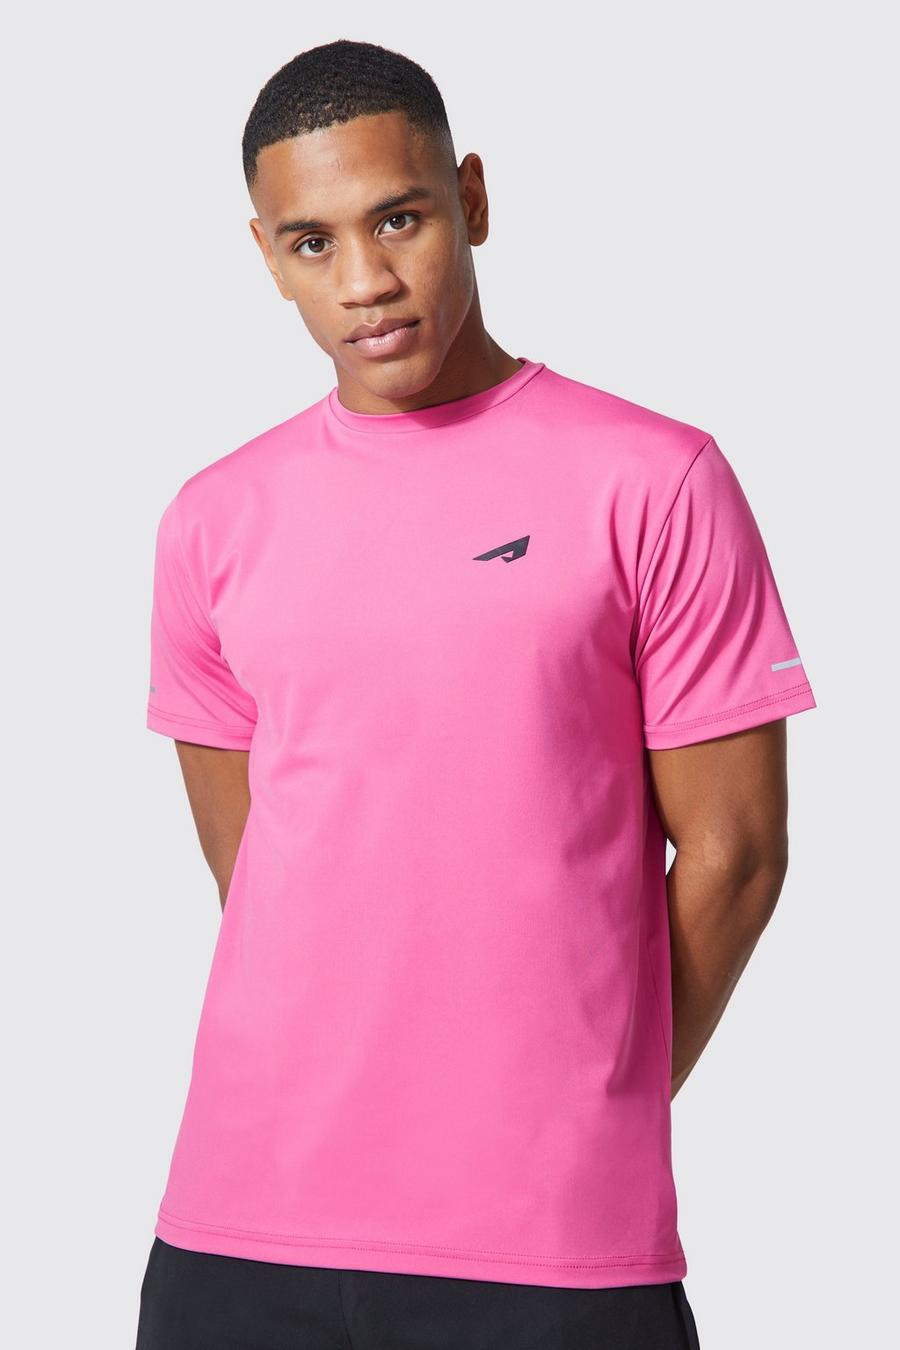 Camiseta Active resistente con logo, Bright pink image number 1